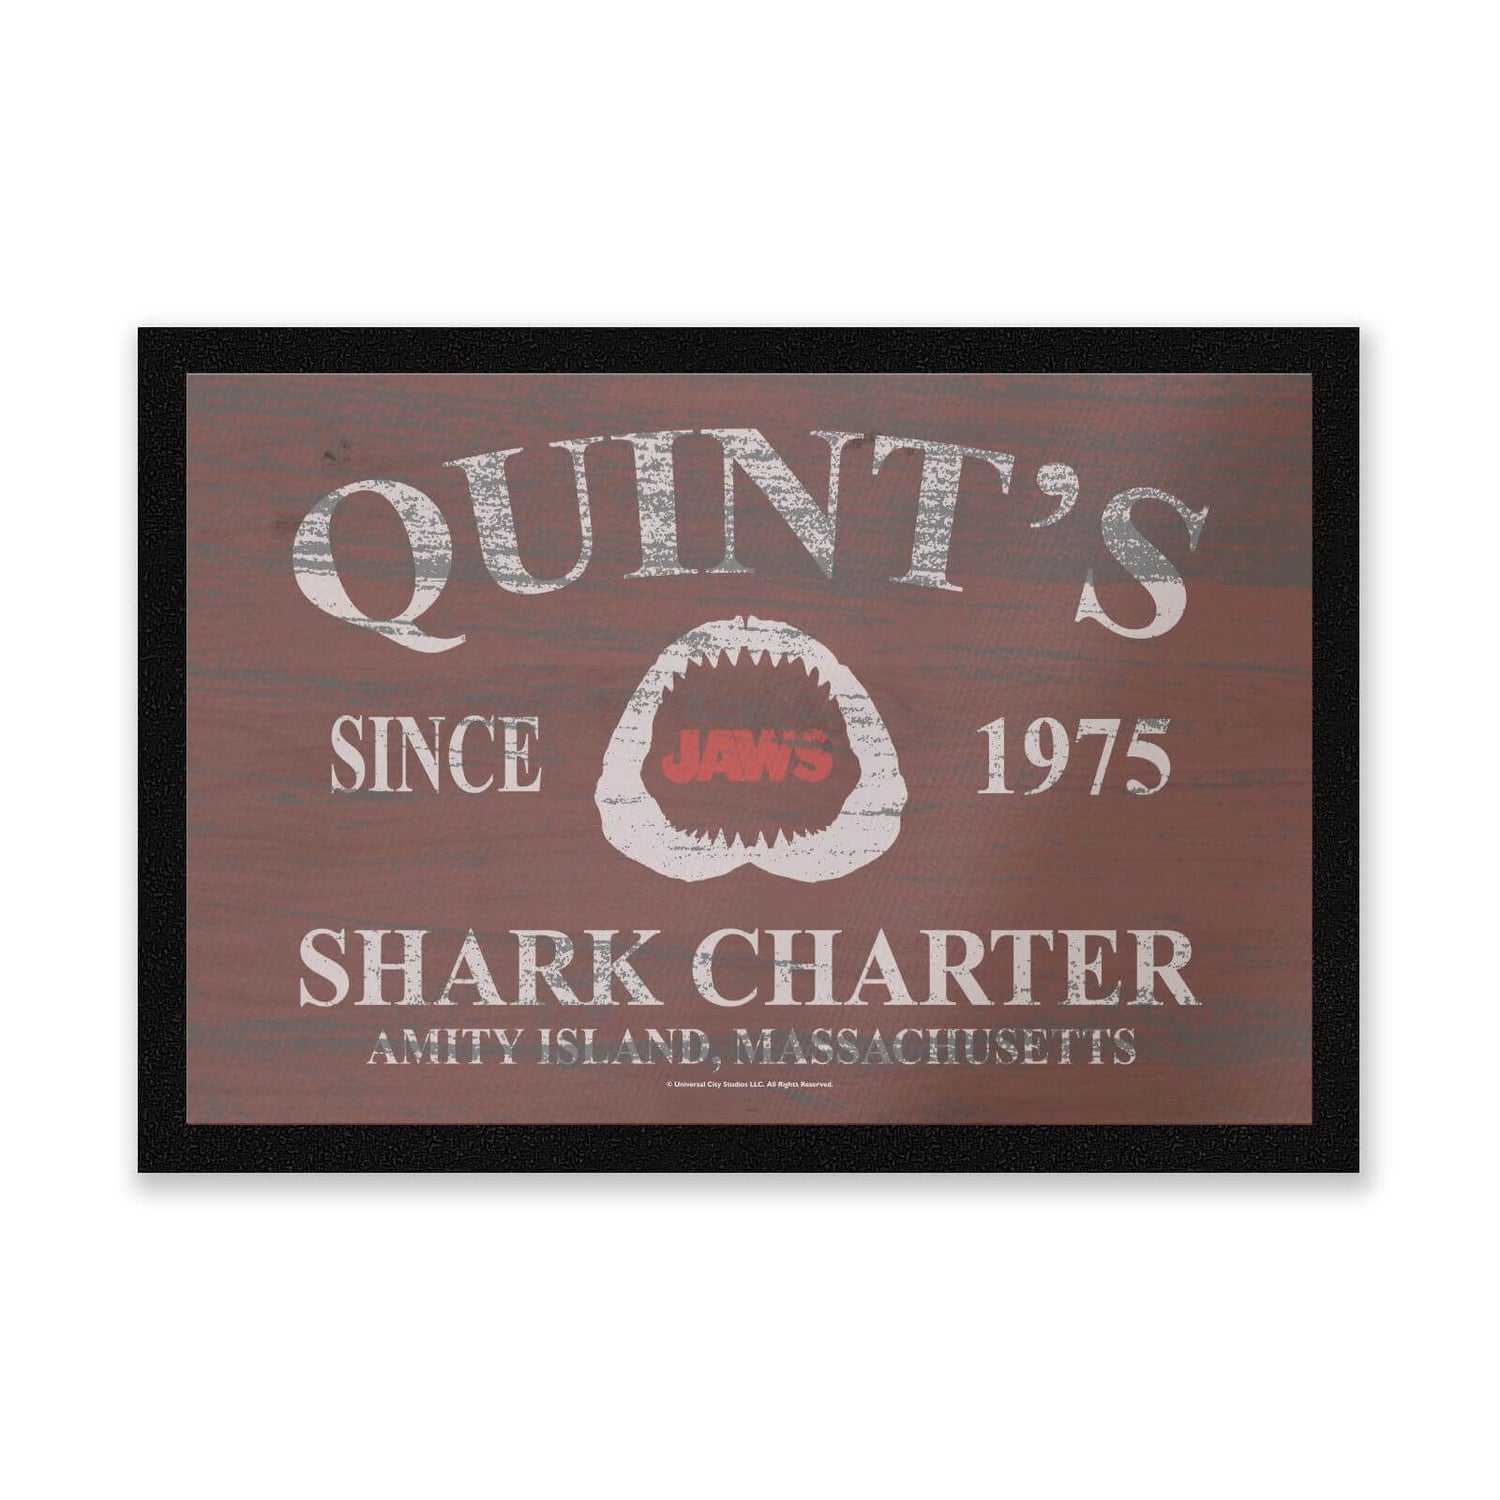 Jaws Quints Shark Charter Entrance Mat